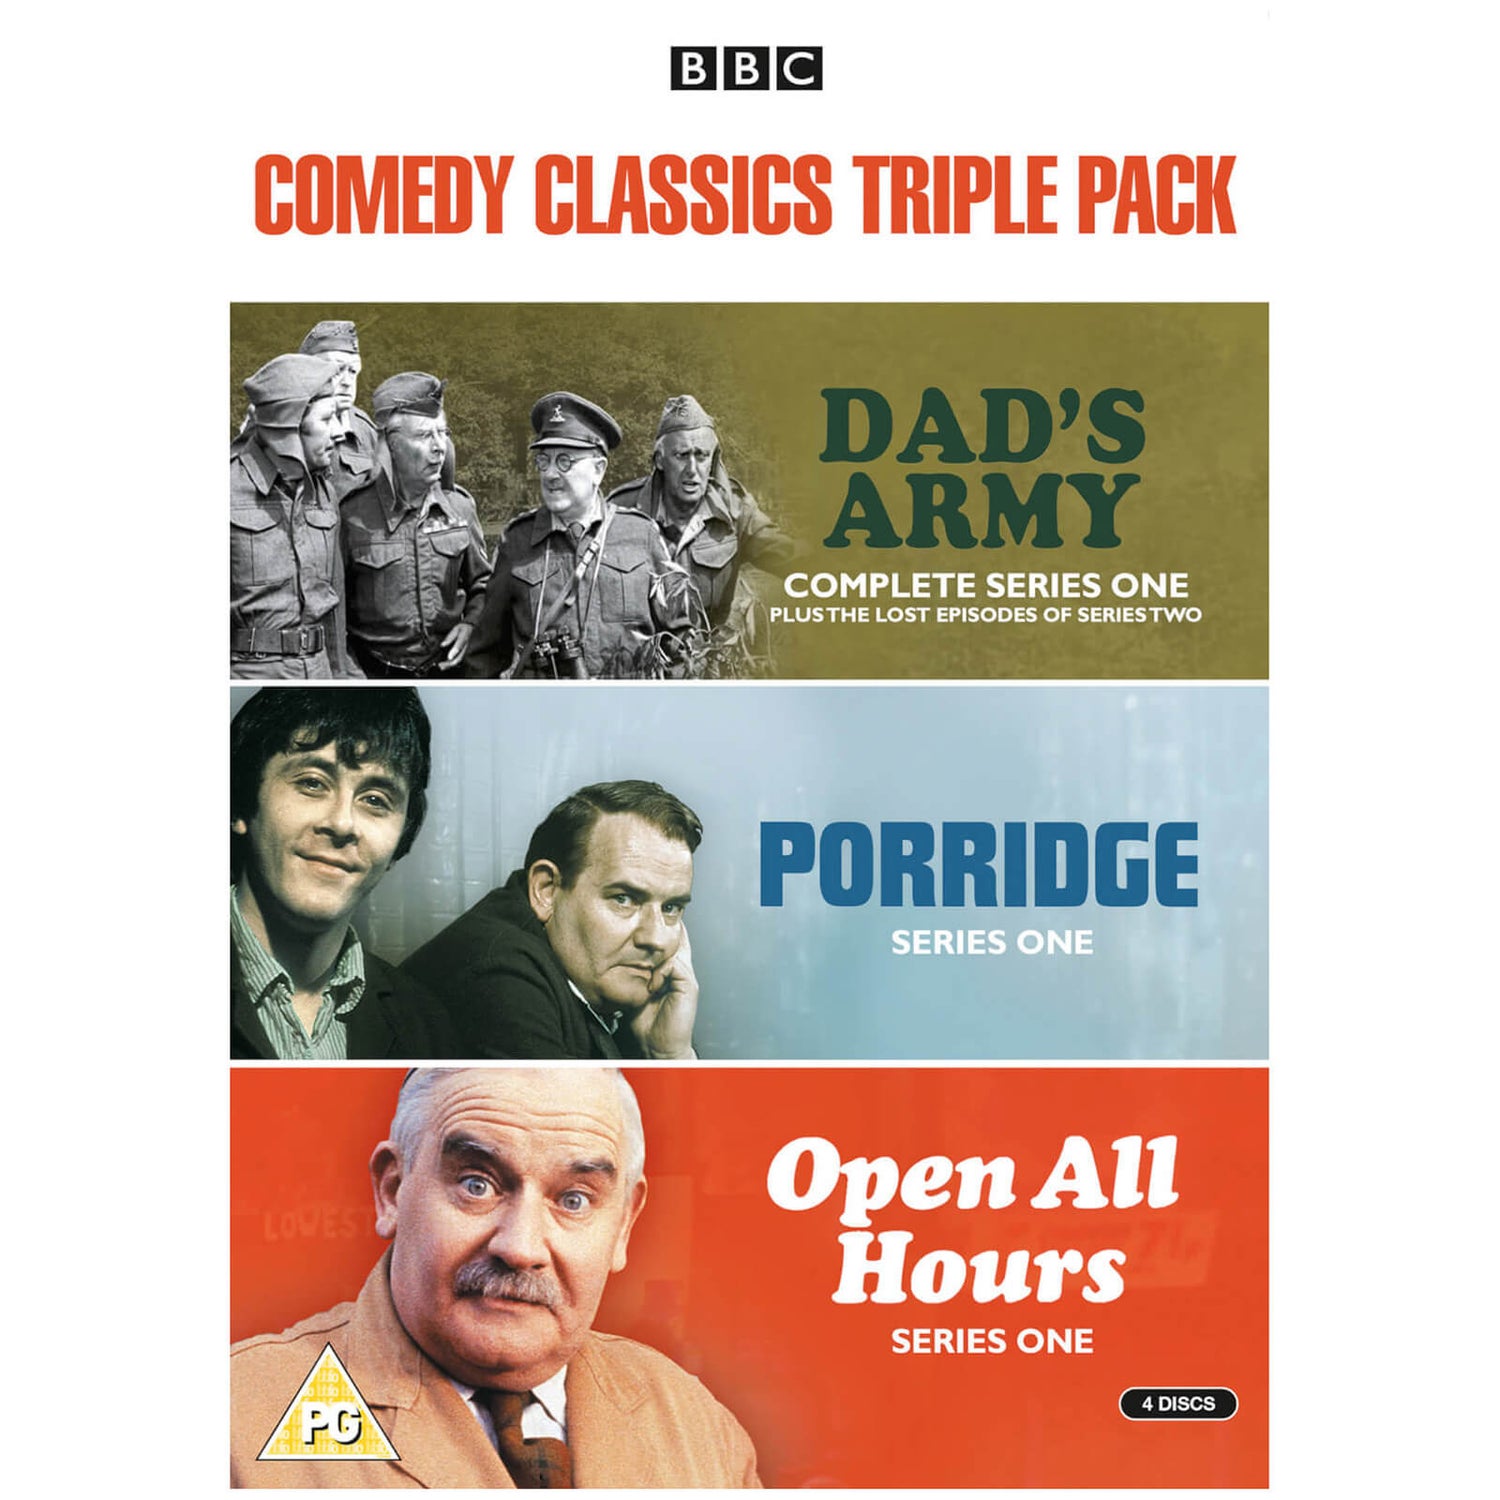 BBC Comedy Classics Driedubbel pak